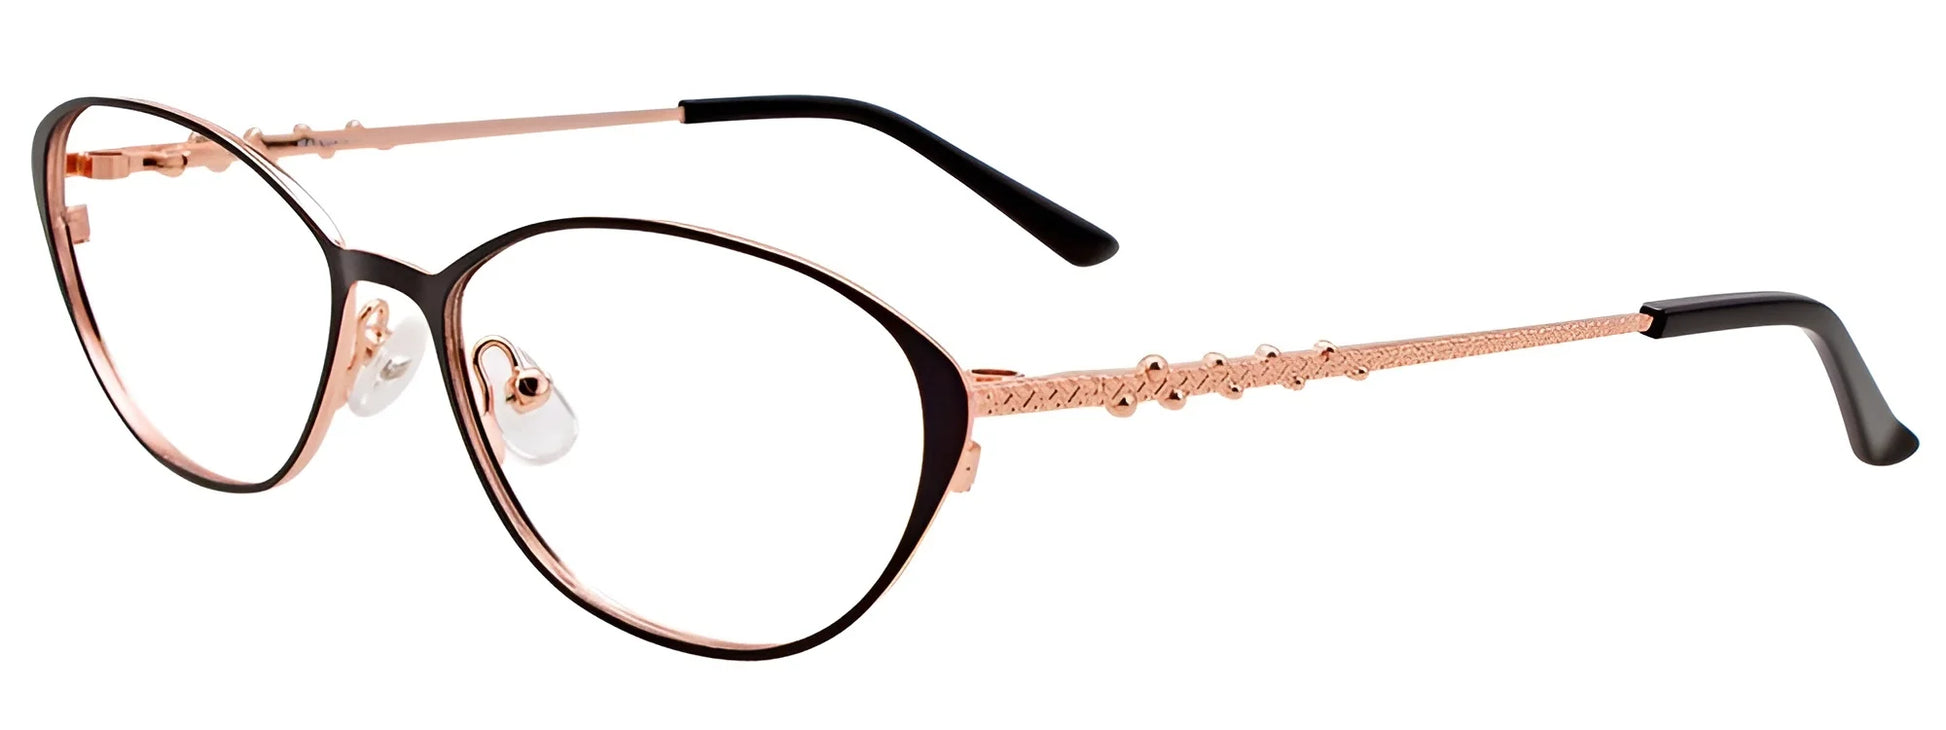 EasyClip EC540 Eyeglasses with Clip-on Sunglasses Matt Black & Shiny Rose Gold